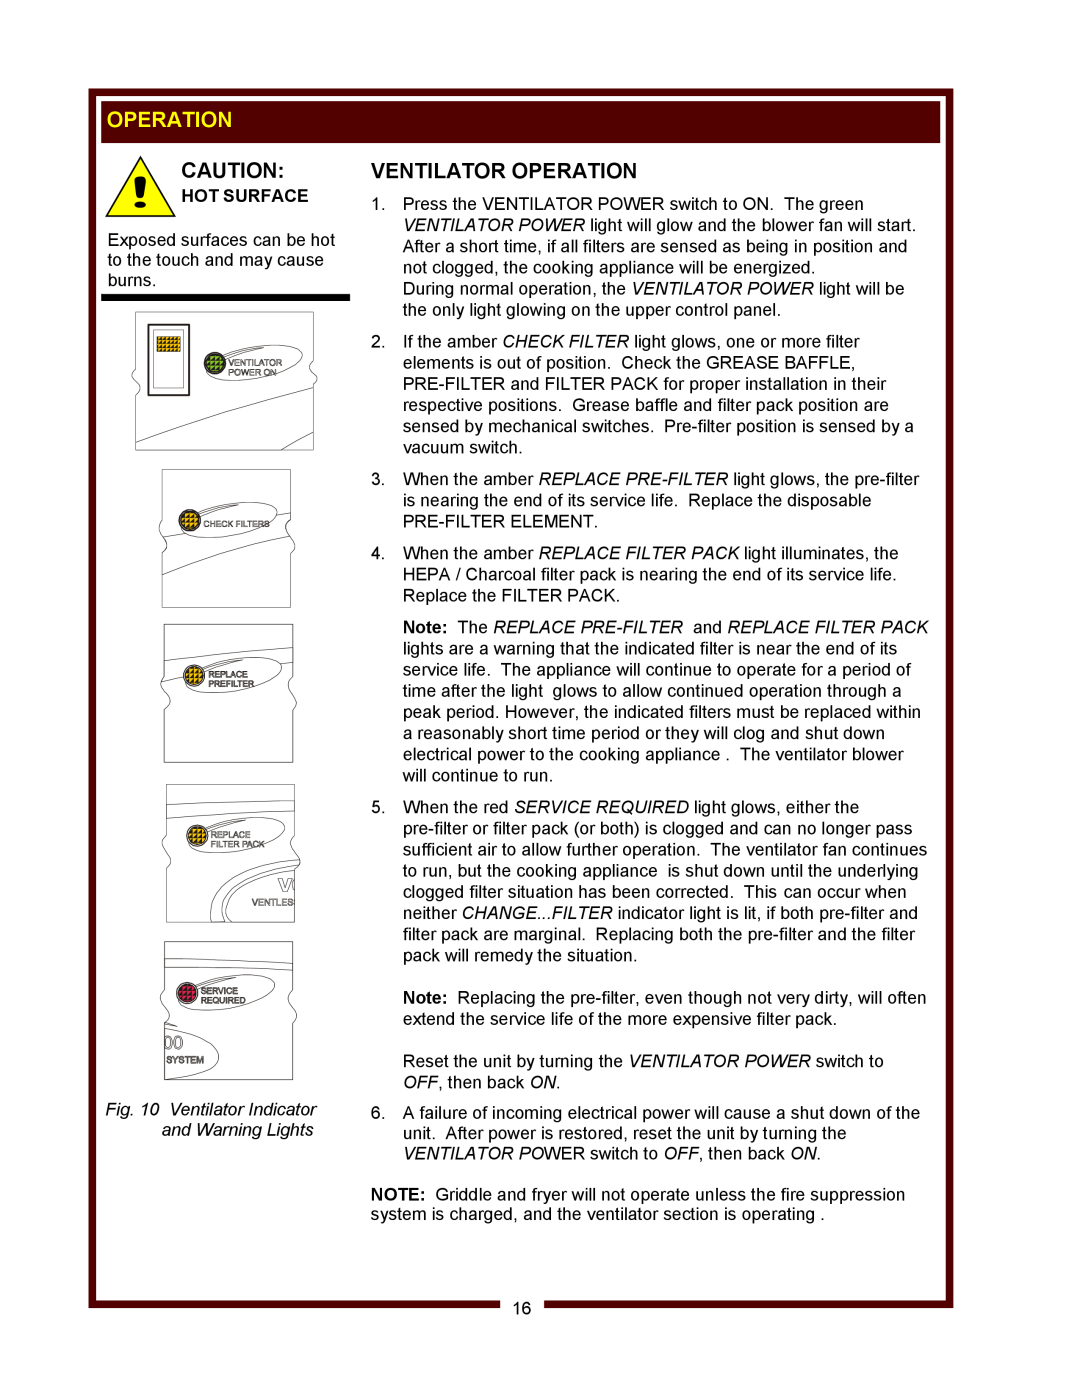 Wells WV-FGRW operation manual Ventilator Operation, Hot Surface, Ventilator Indicator and Warning Lights 